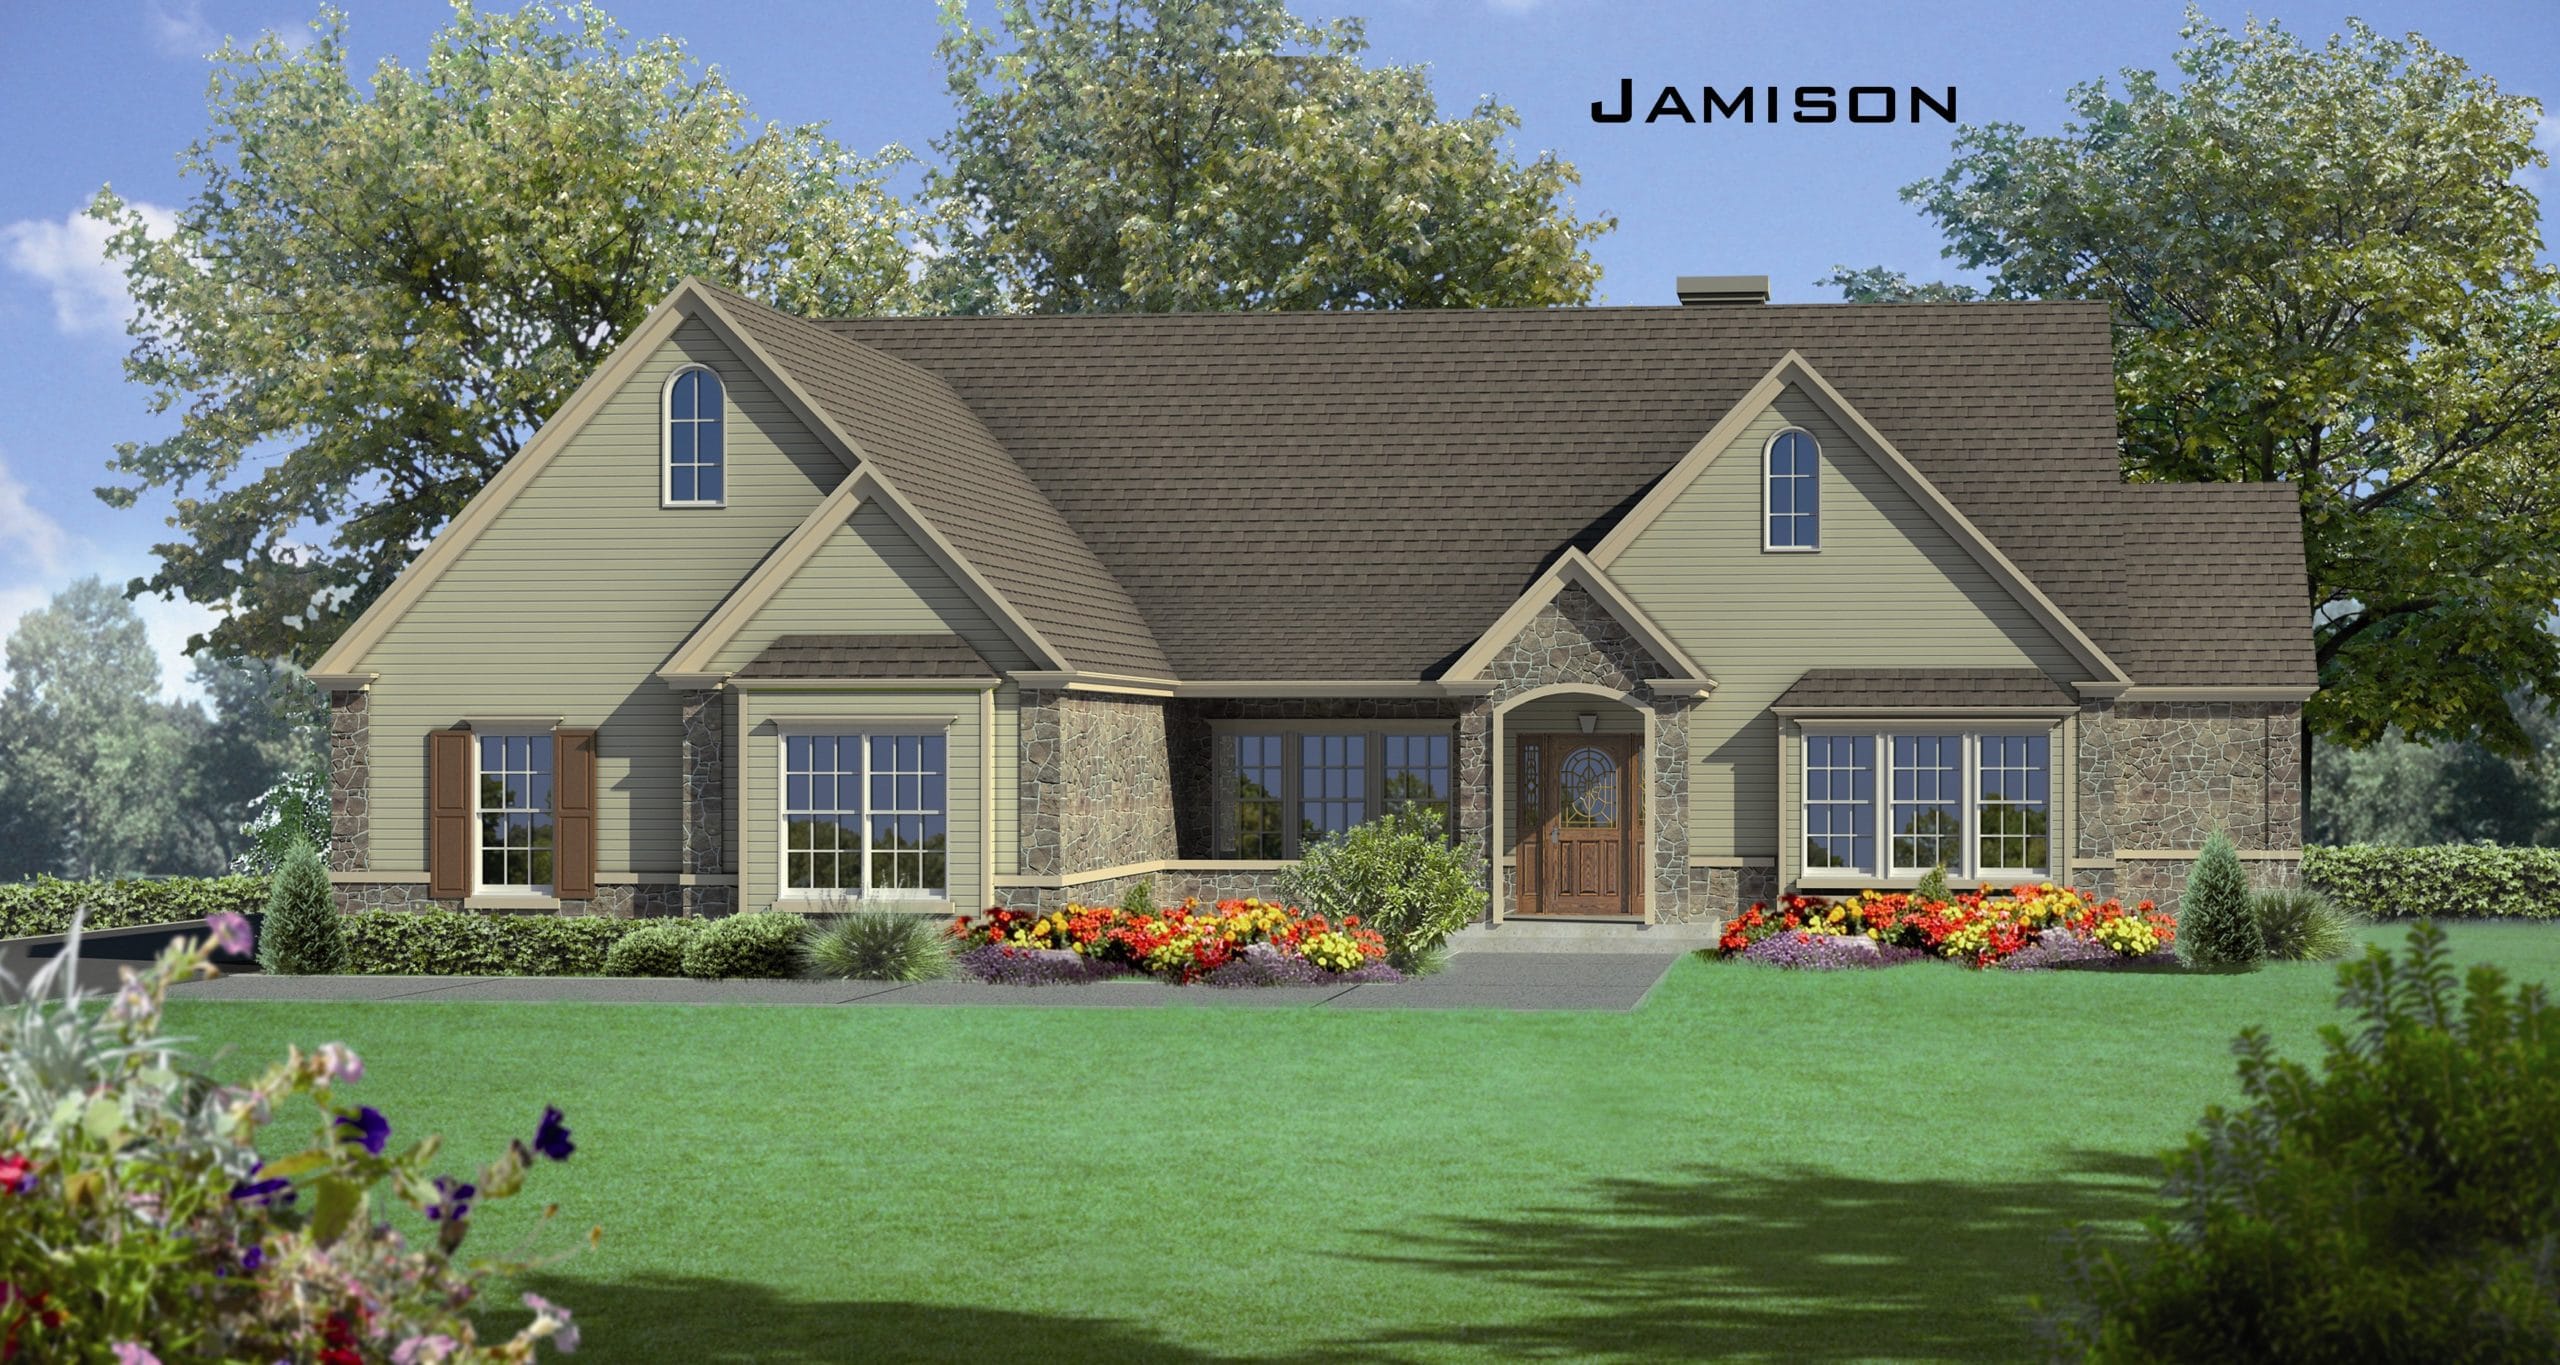 Jamison House Model